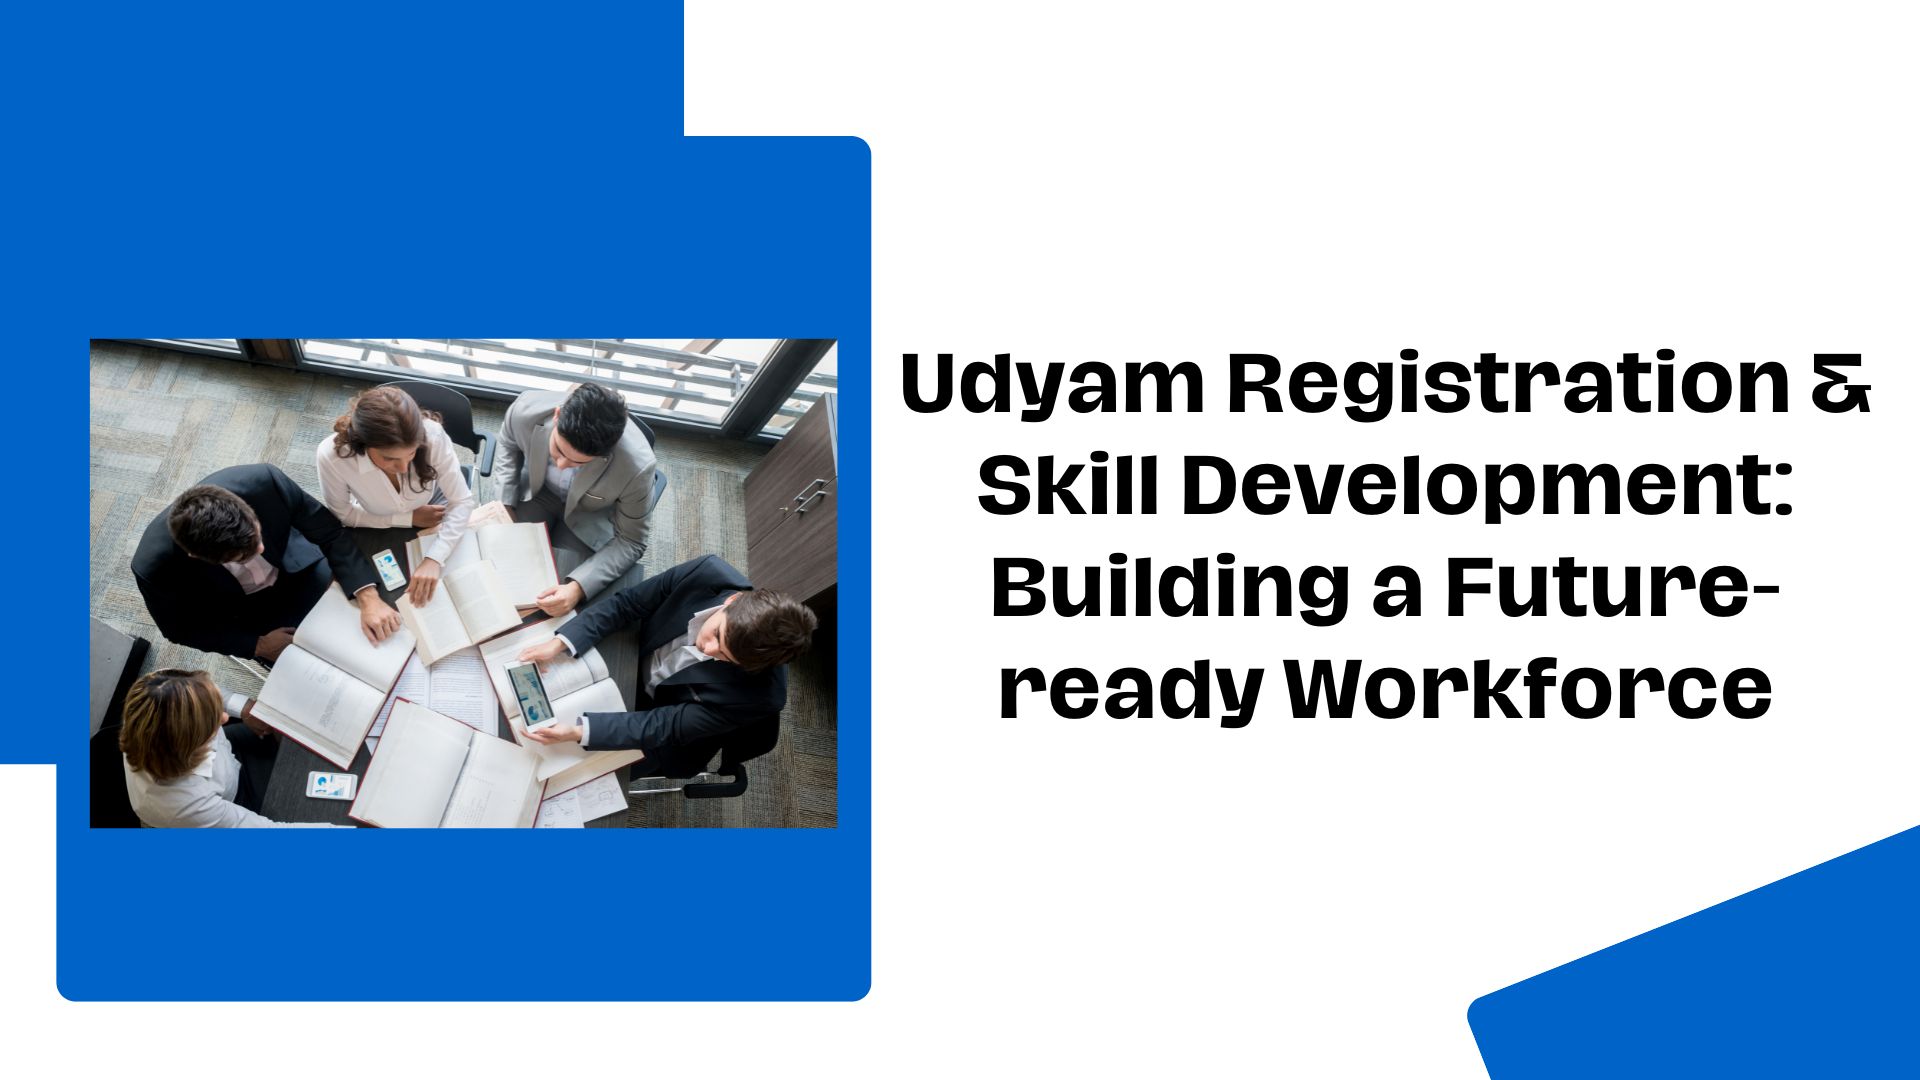 Udyam Registration & Skill Development: Building a Future-ready Workforce